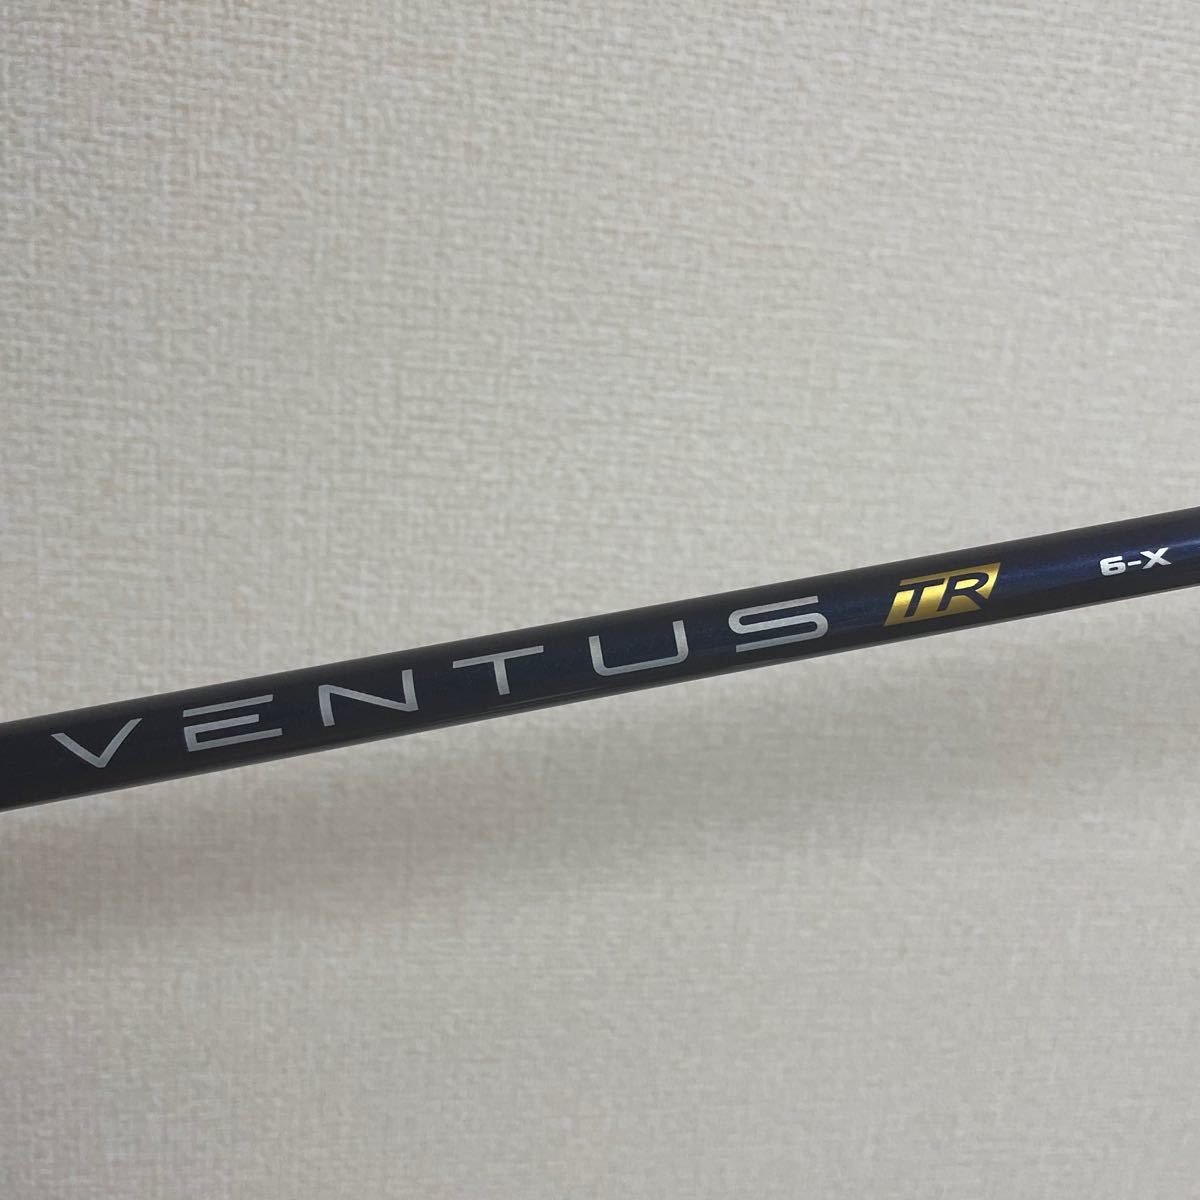 Ventus TR 6X キャロウェイ ドライバー用 シャフト 美品 | laninternet